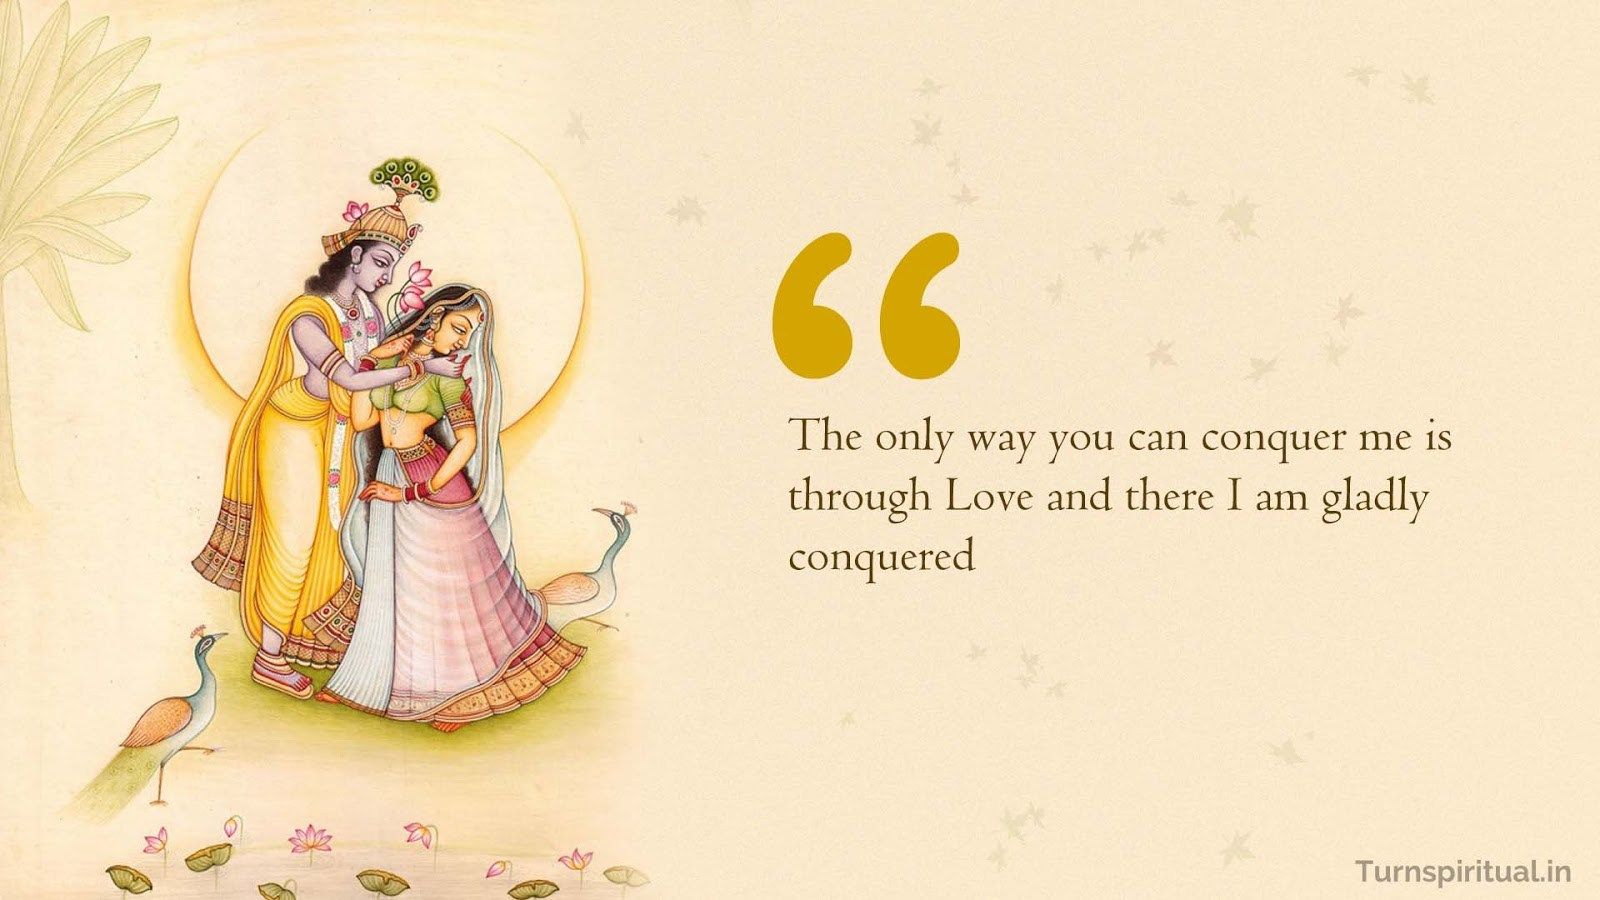 Quotes by Lord Krishna from Bhagavadgita